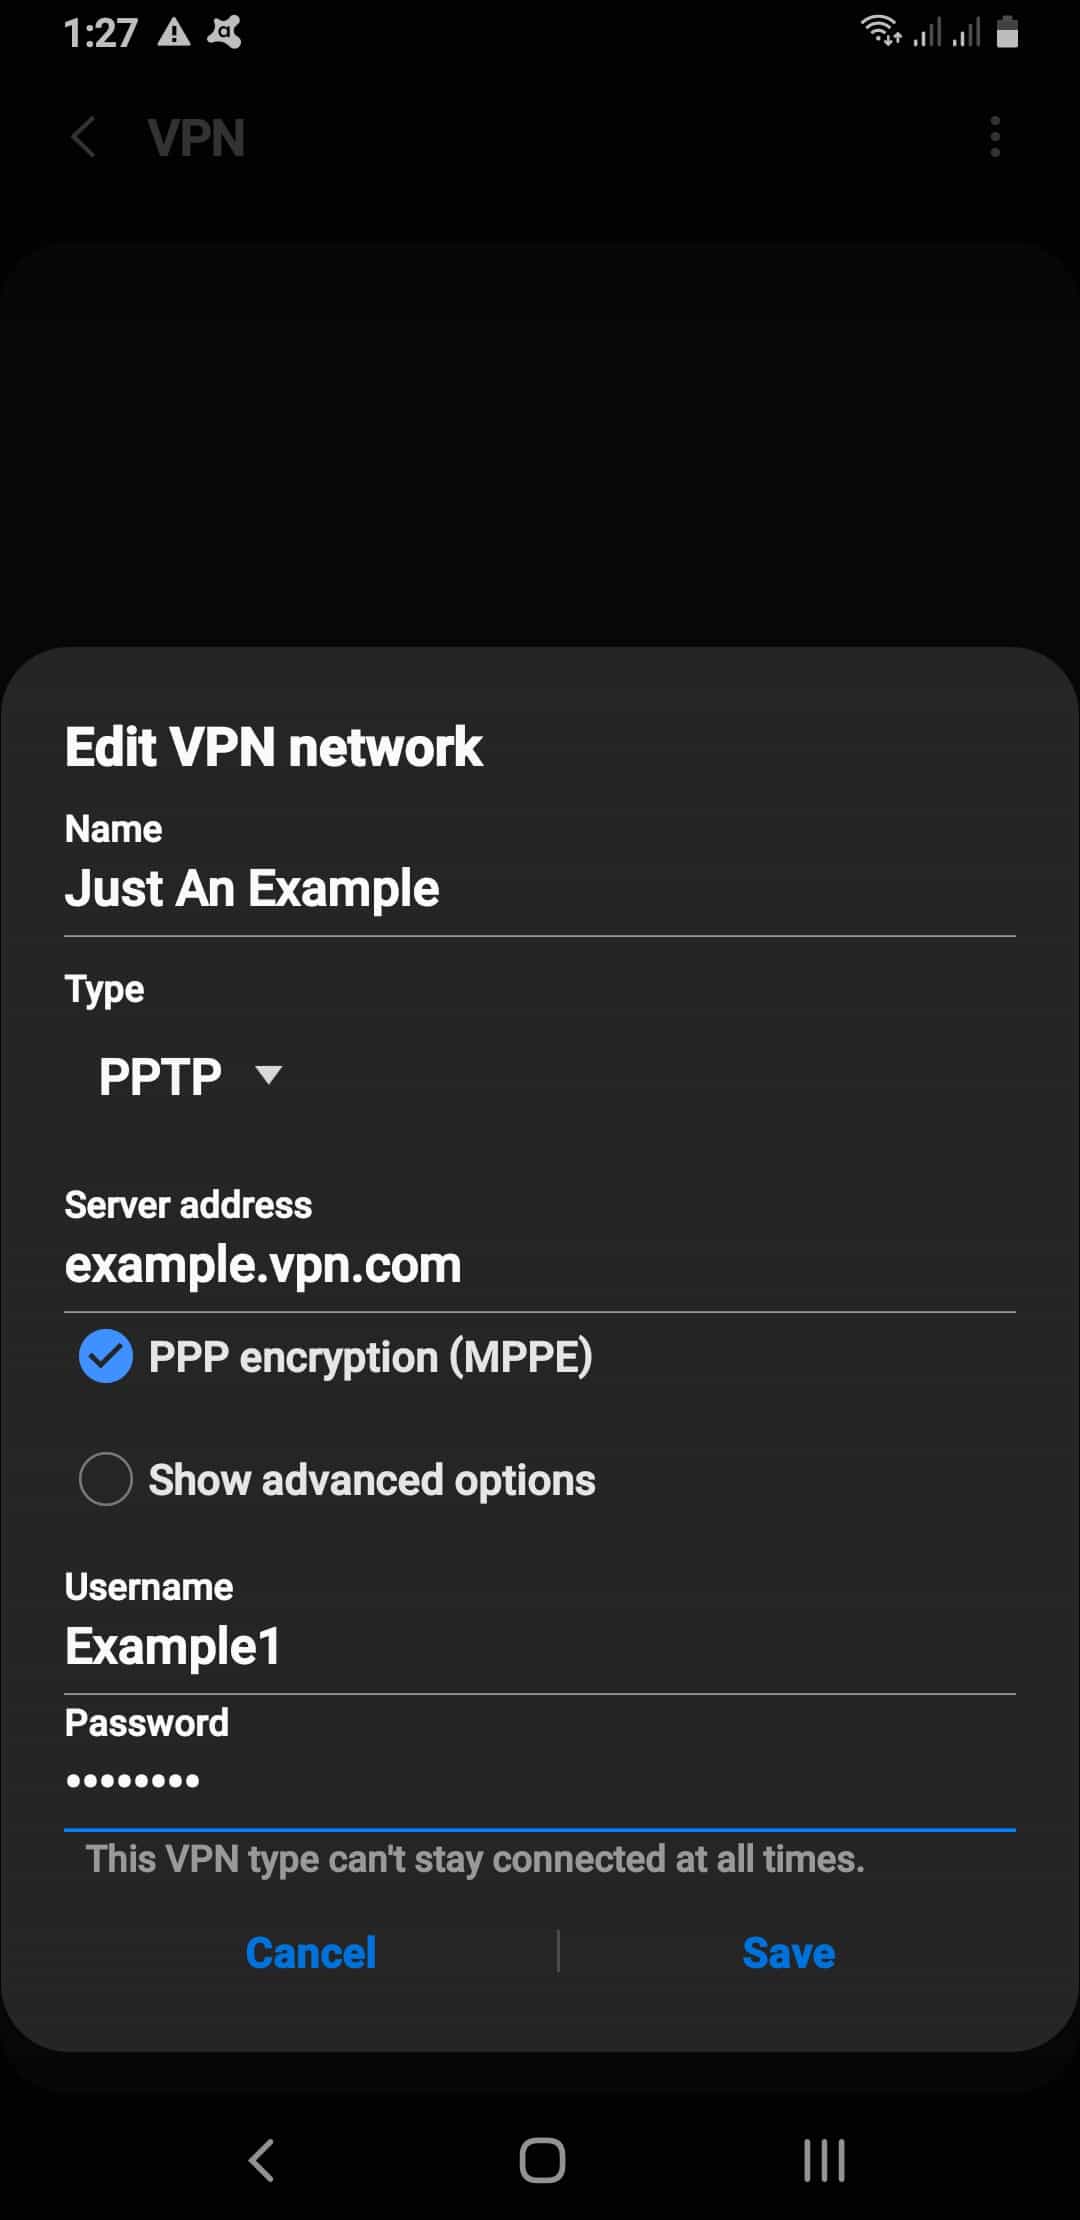 Where is VPN in my settings?